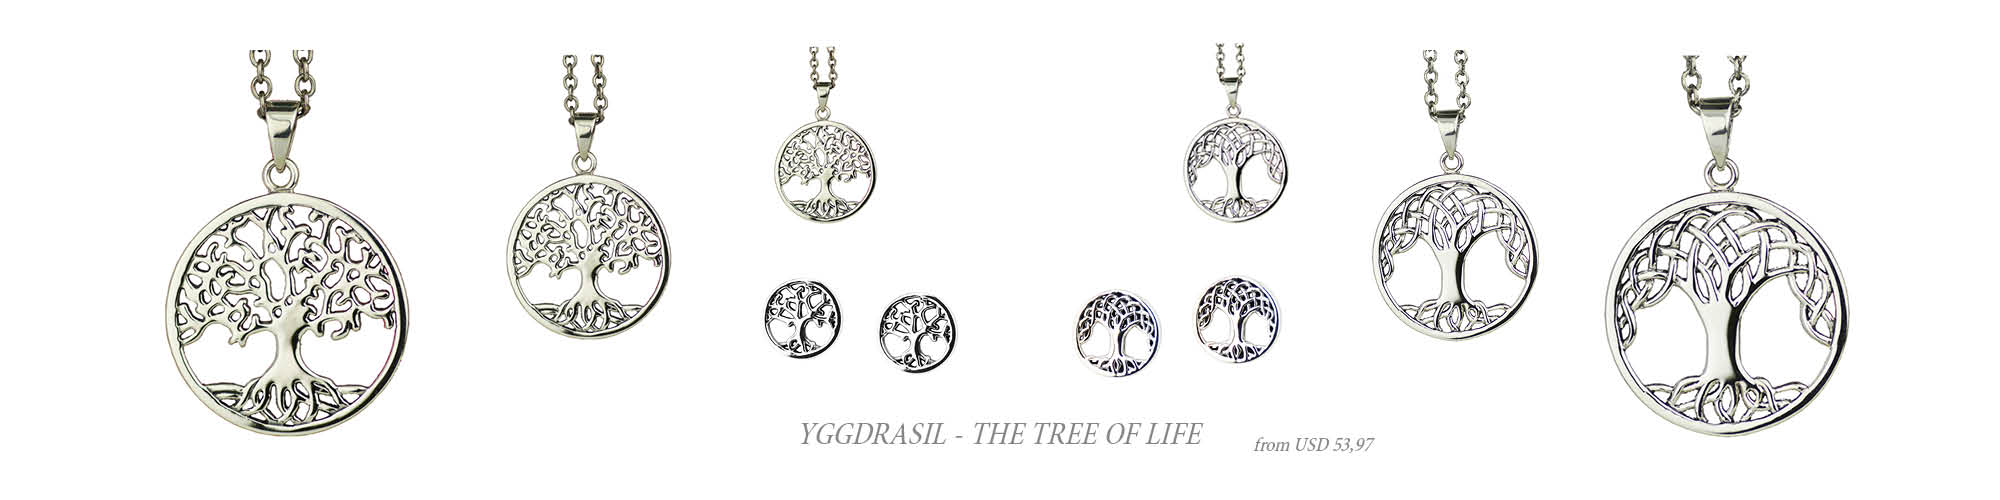 YGGDRASIL TREE of LIFE